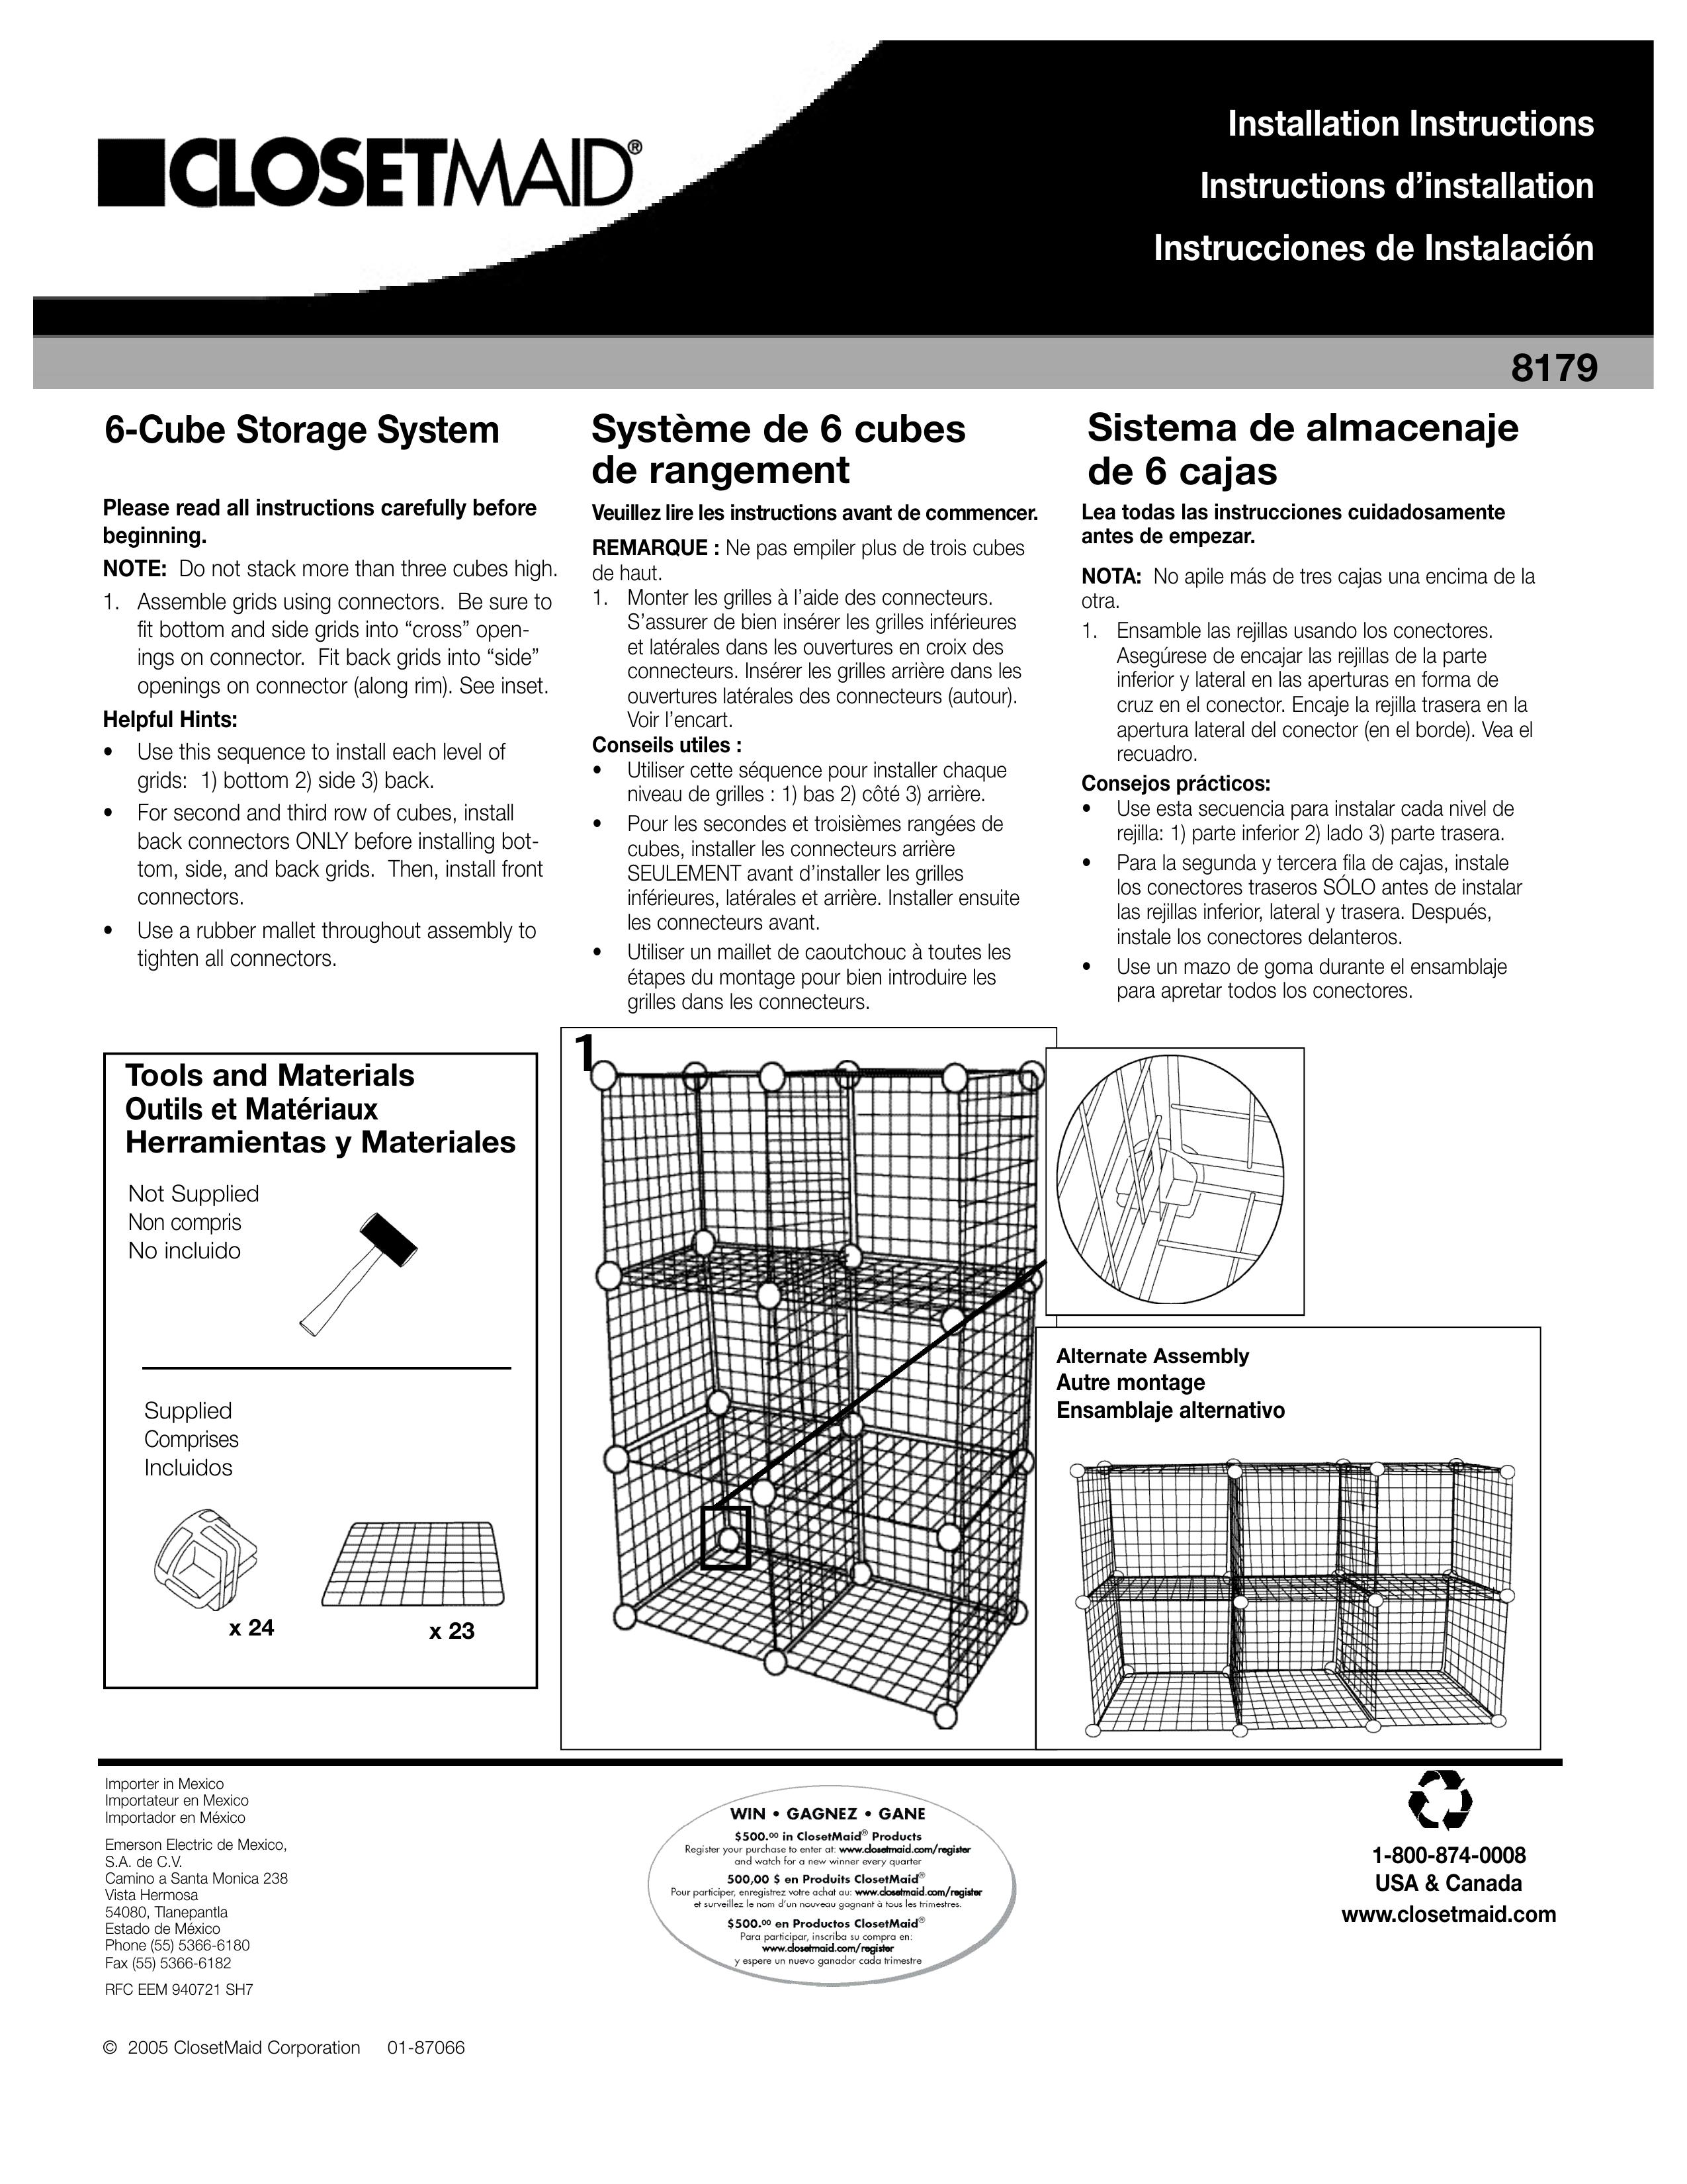 Closet Maid 6-Cube Storage System Outdoor Storage User Manual